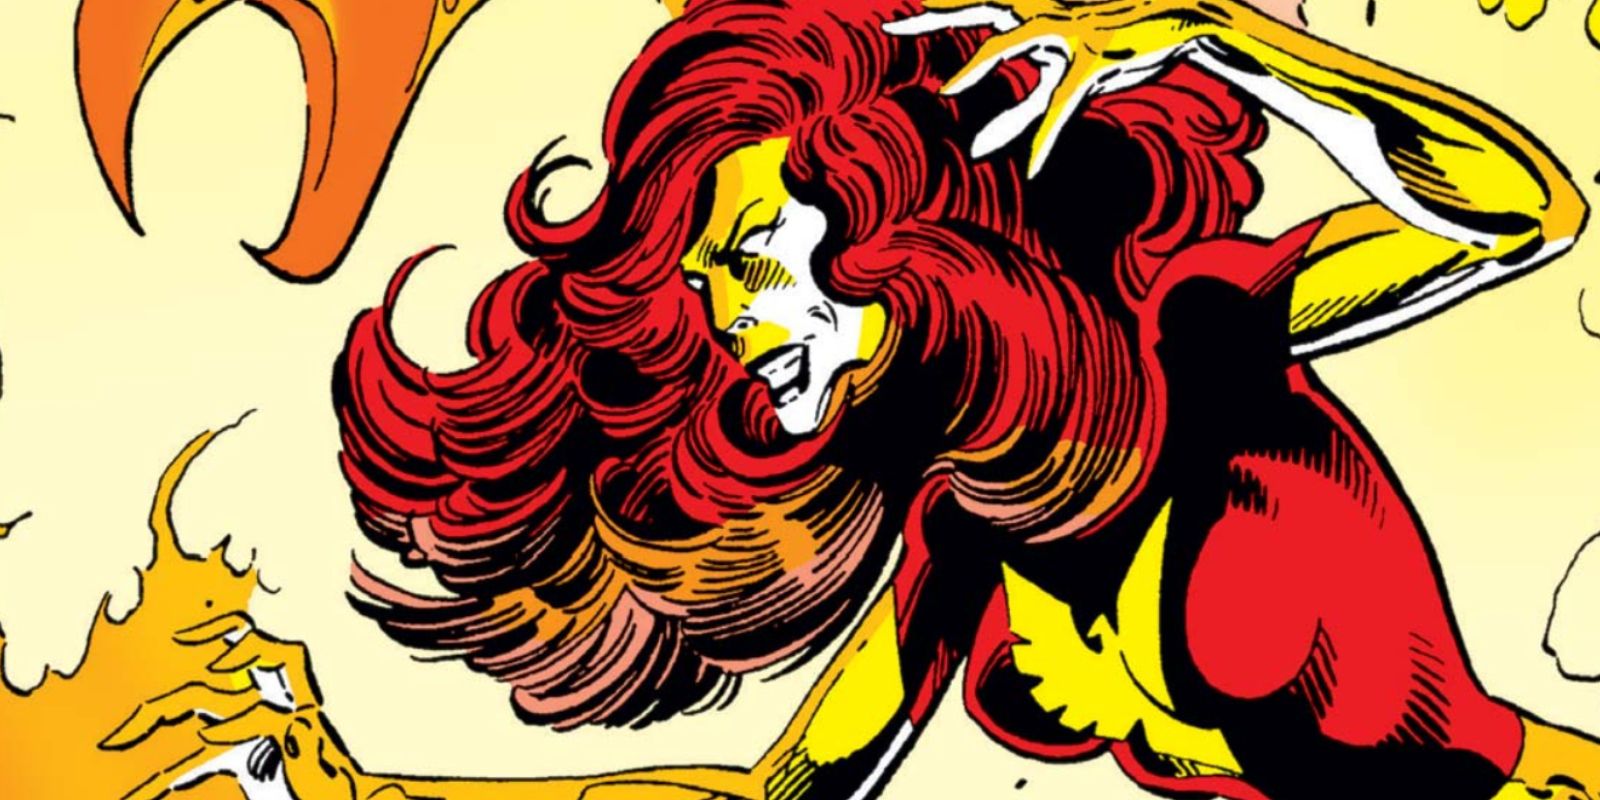 Jean Grey summons flames as the Dark Phoenix.